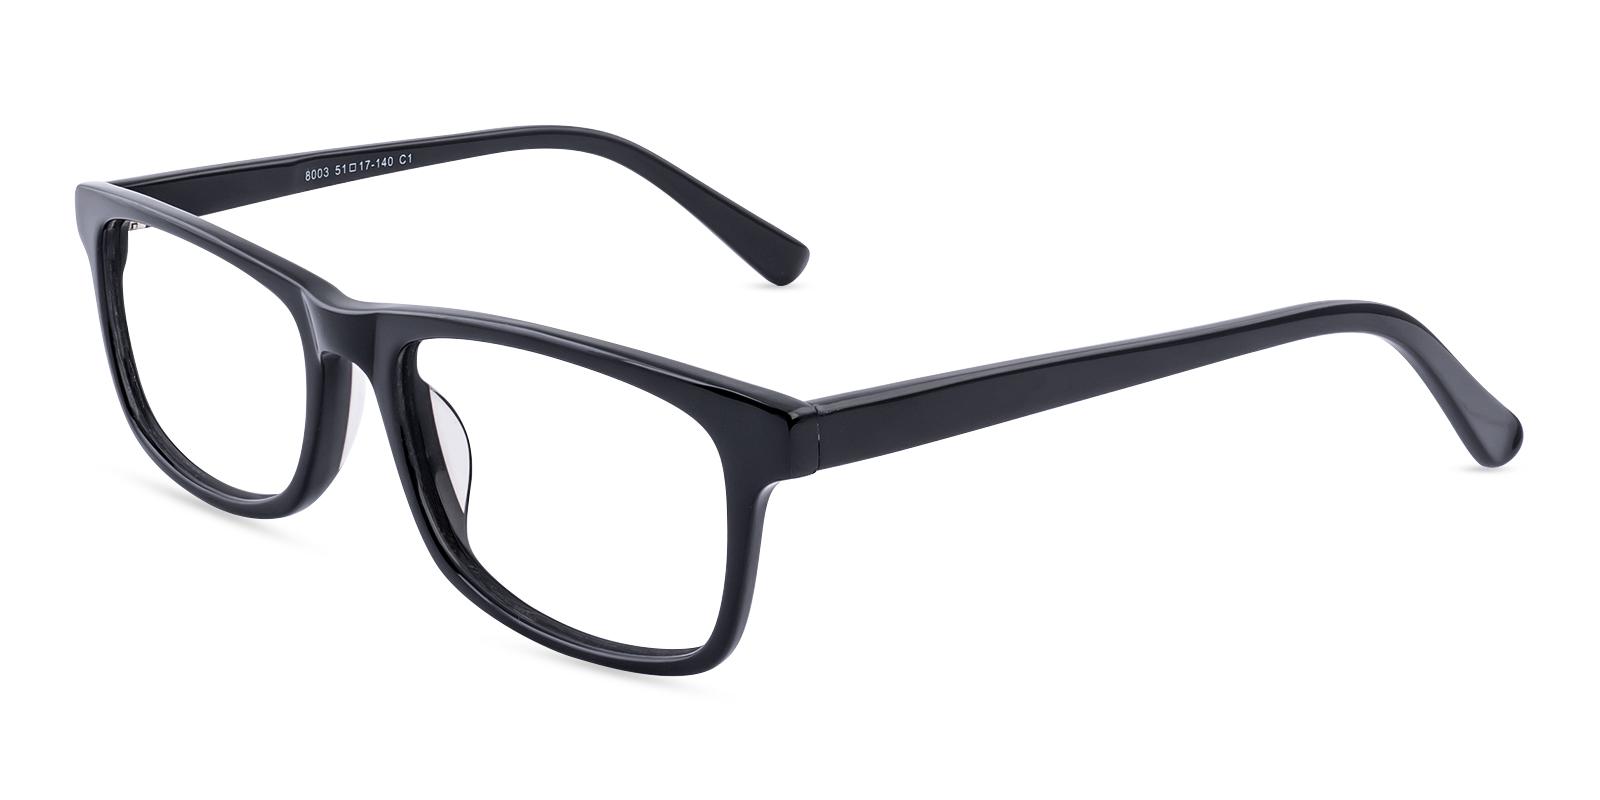 Seemth Black Acetate Eyeglasses , UniversalBridgeFit Frames from ABBE Glasses